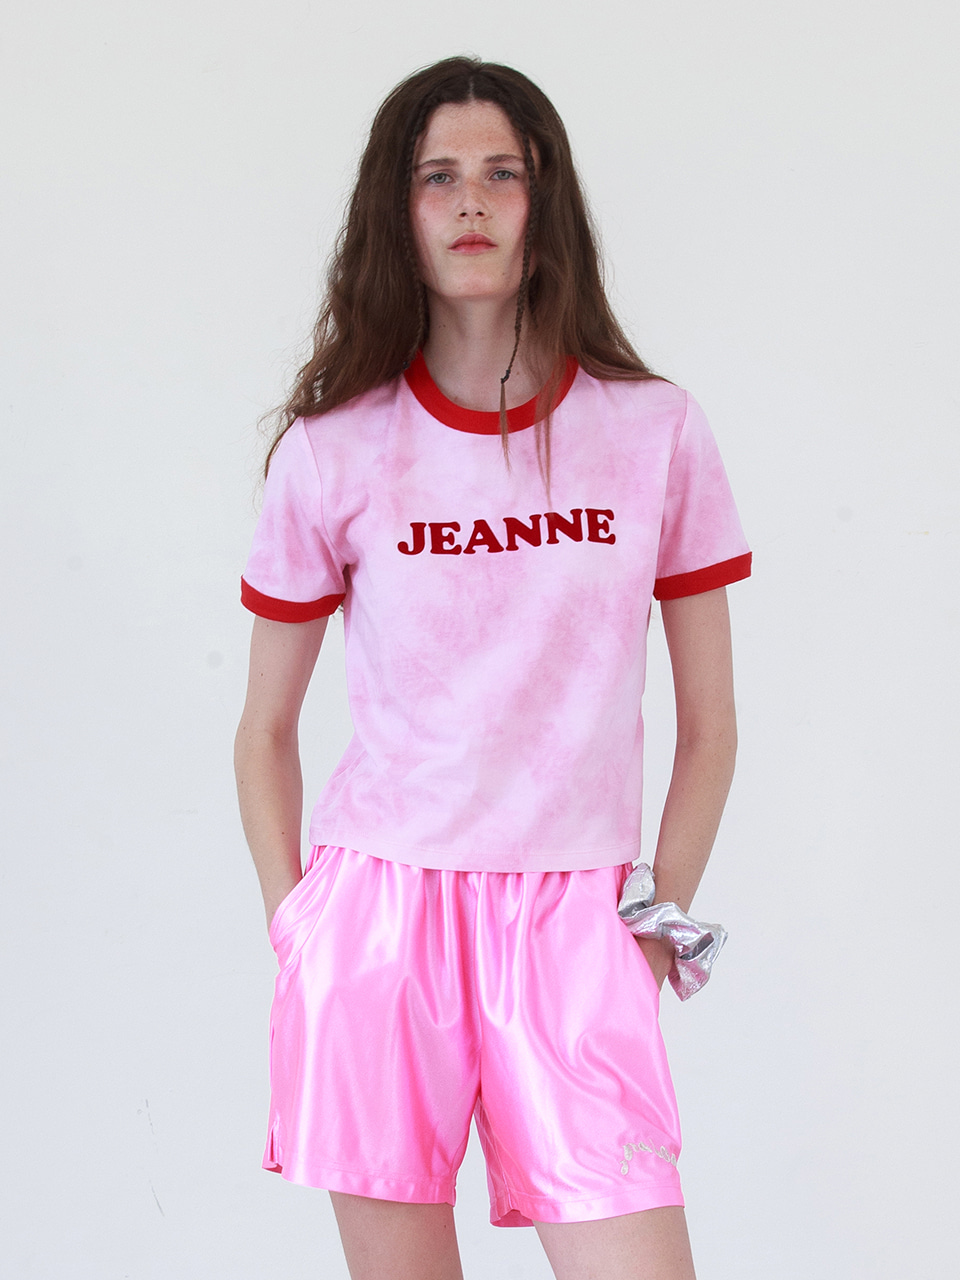 Jeanne Ringer T-Shirt in Pink